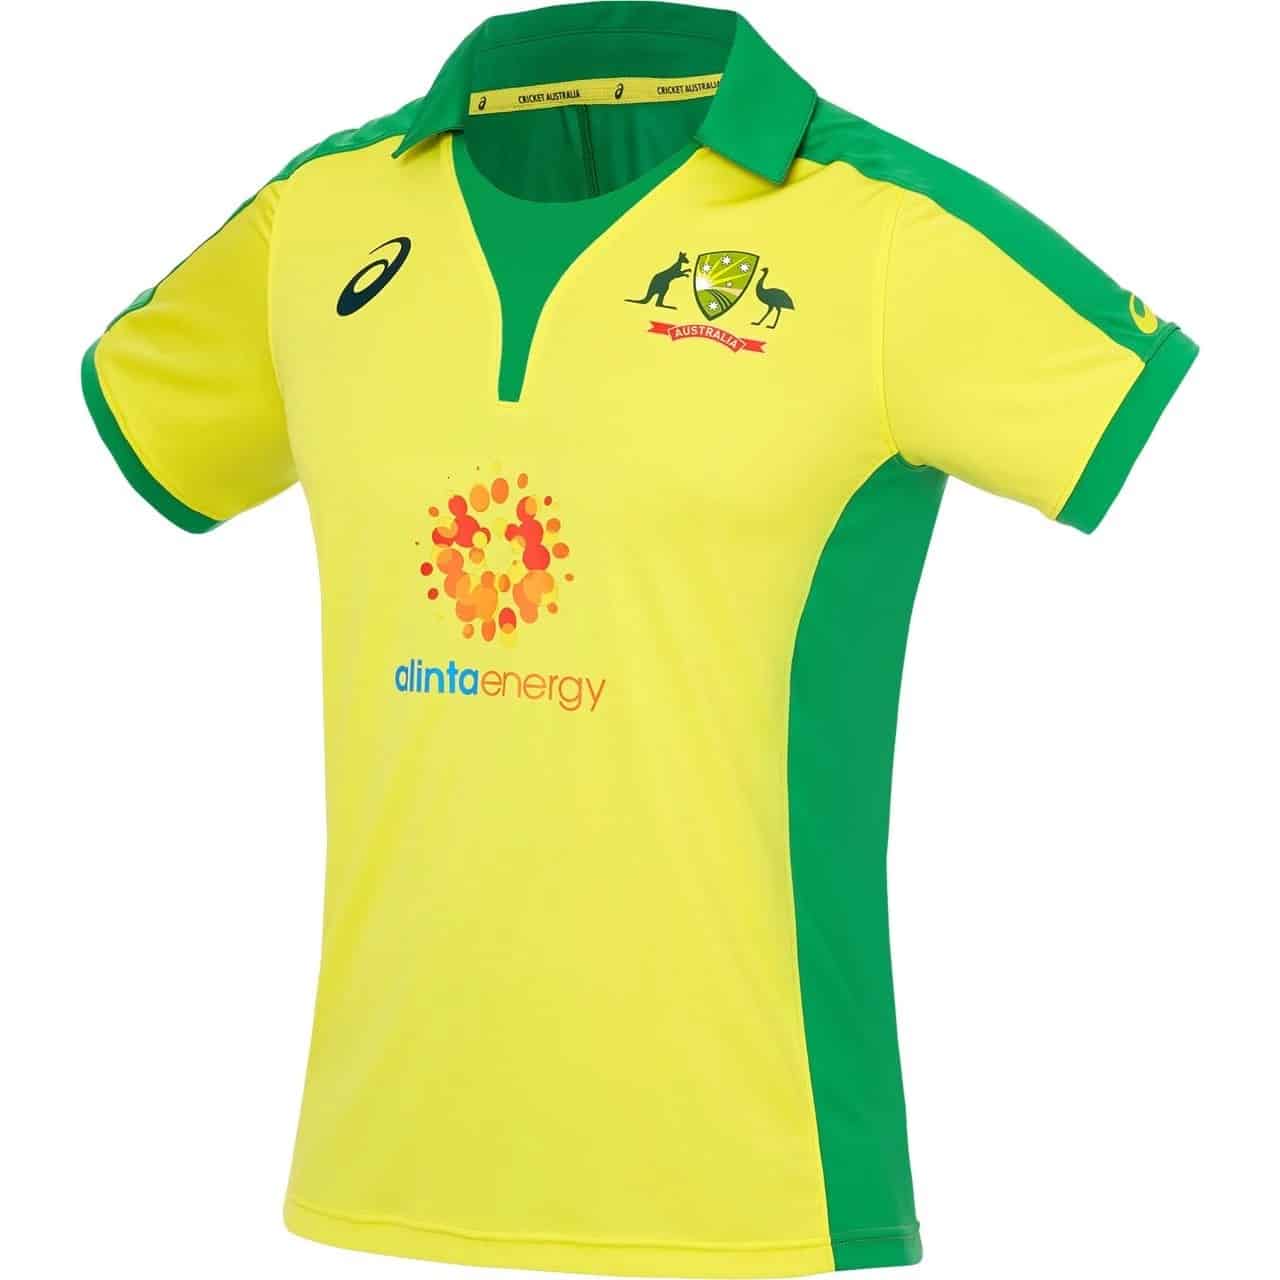 australian cricket uniform